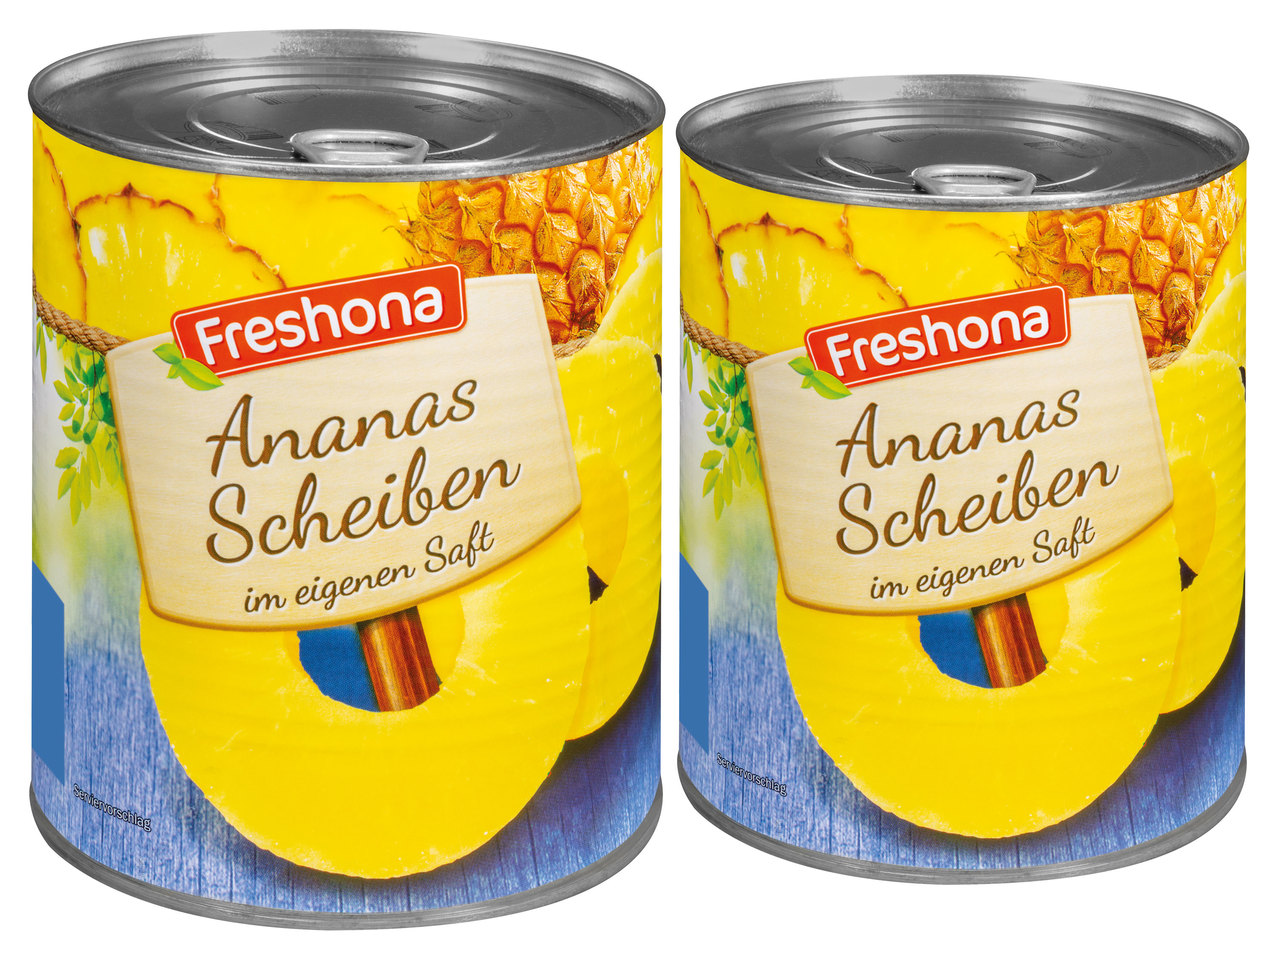 FRESHONA Ananas-Scheiben